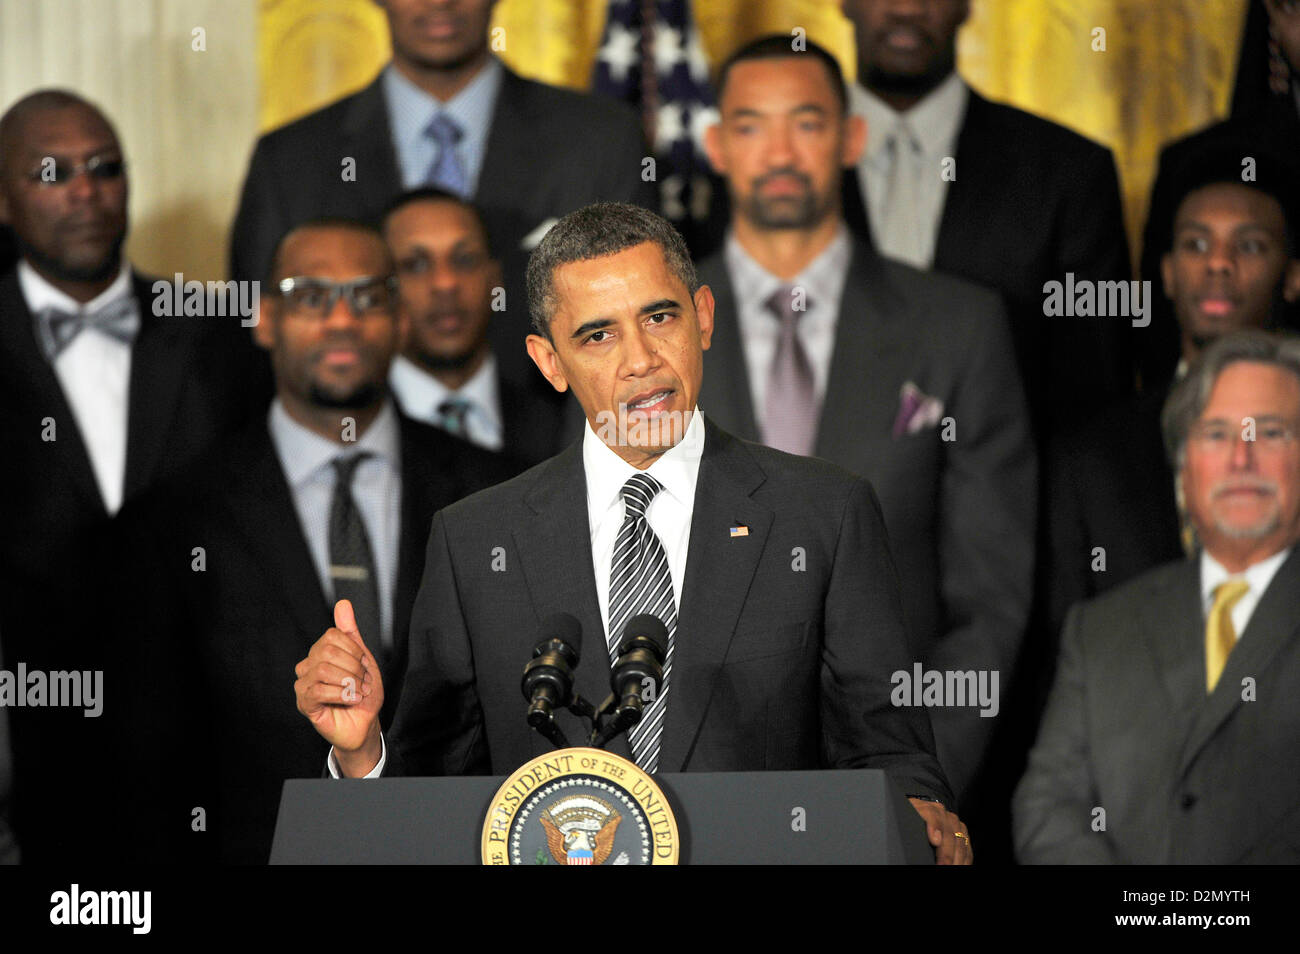 Washington DC, USA. 28. Januar 2013. US-Präsident Barack Obama begrüßt den NBA-Champion Miami Heat im Weißen Haus in Washington, D.C. am Montag, dem 28. Januar 2013..Credit: Ron Sachs / CNP / Alamy Live News Stockfoto